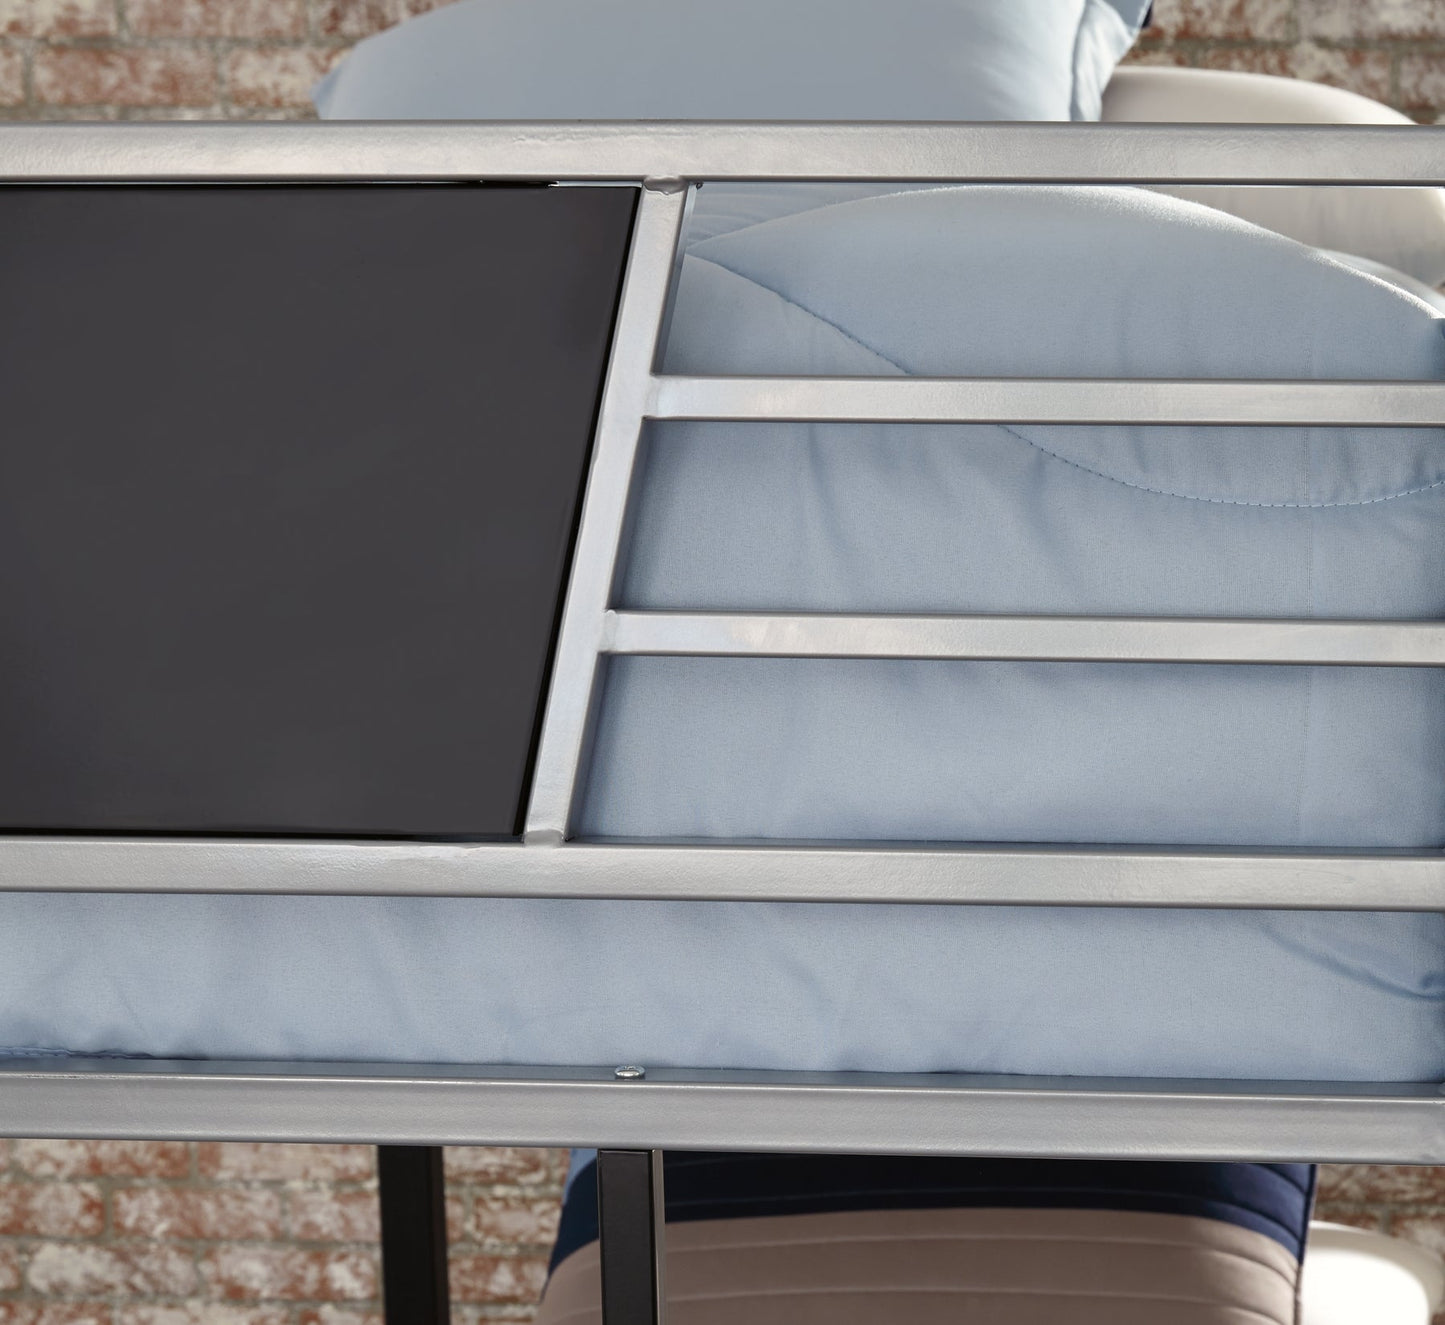 Dinsmore Twin/Twin Bunk Bed w/Ladder at Cloud 9 Mattress & Furniture furniture, home furnishing, home decor